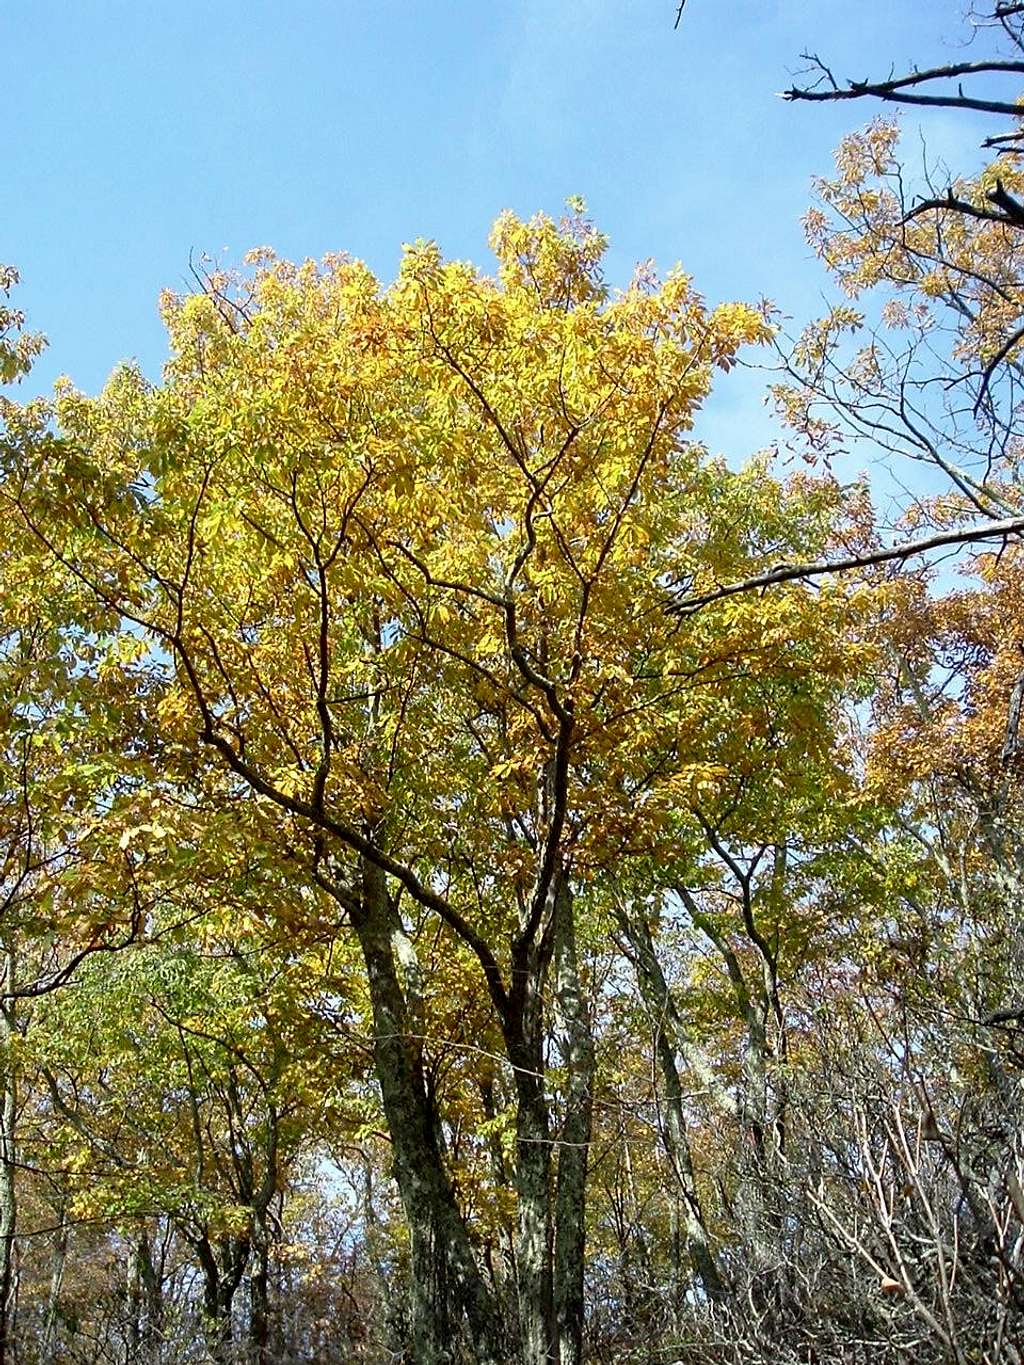 Leaves Turn Yellow on Waonaze